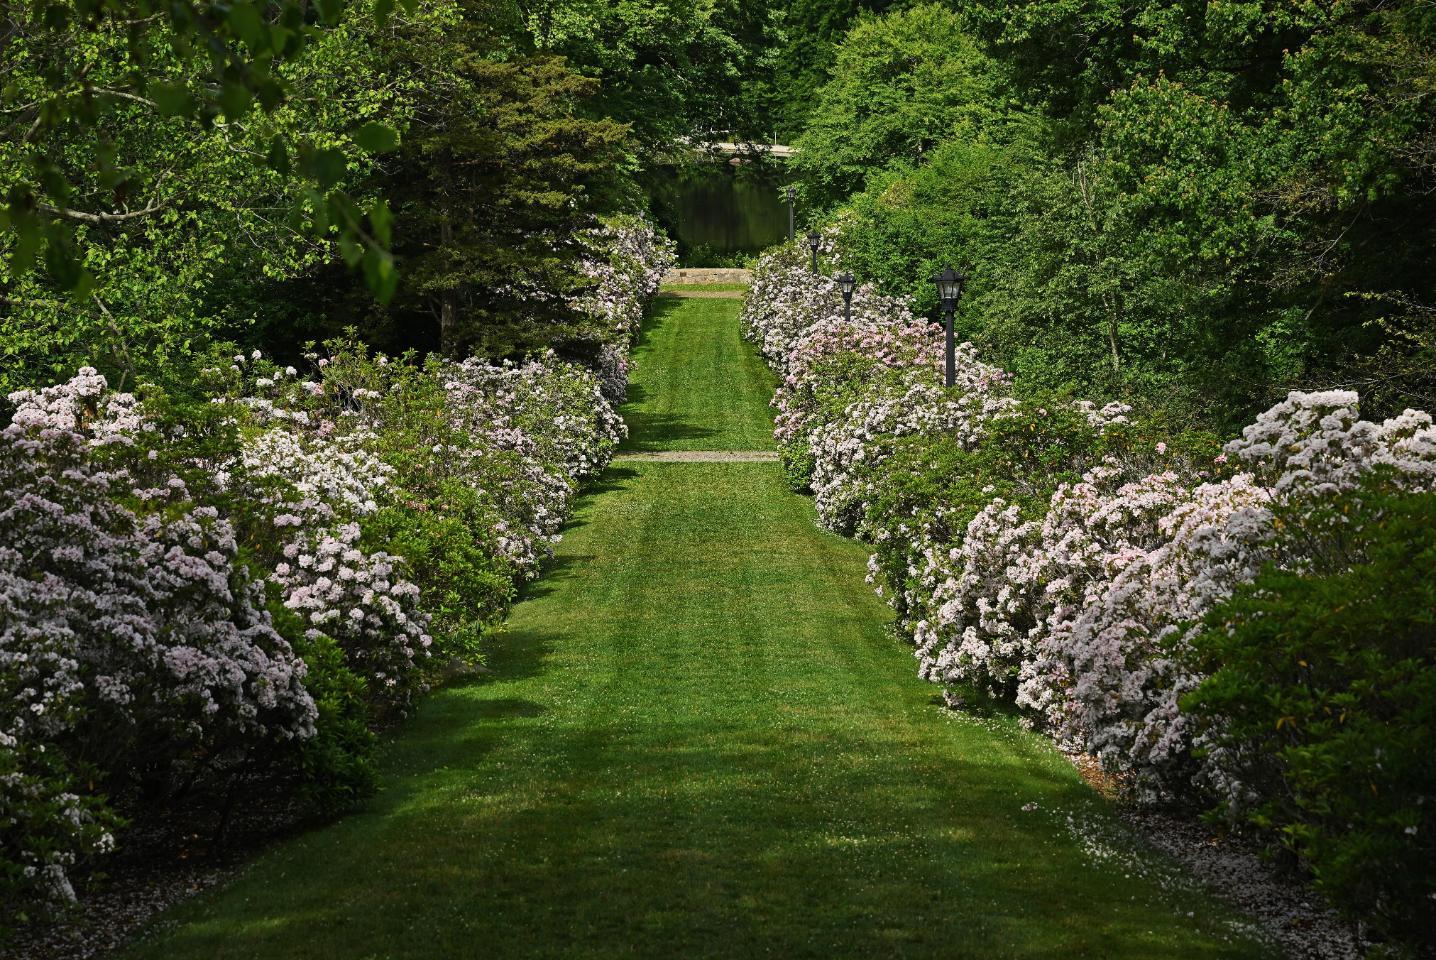 Arboretum main walkway in full bloom